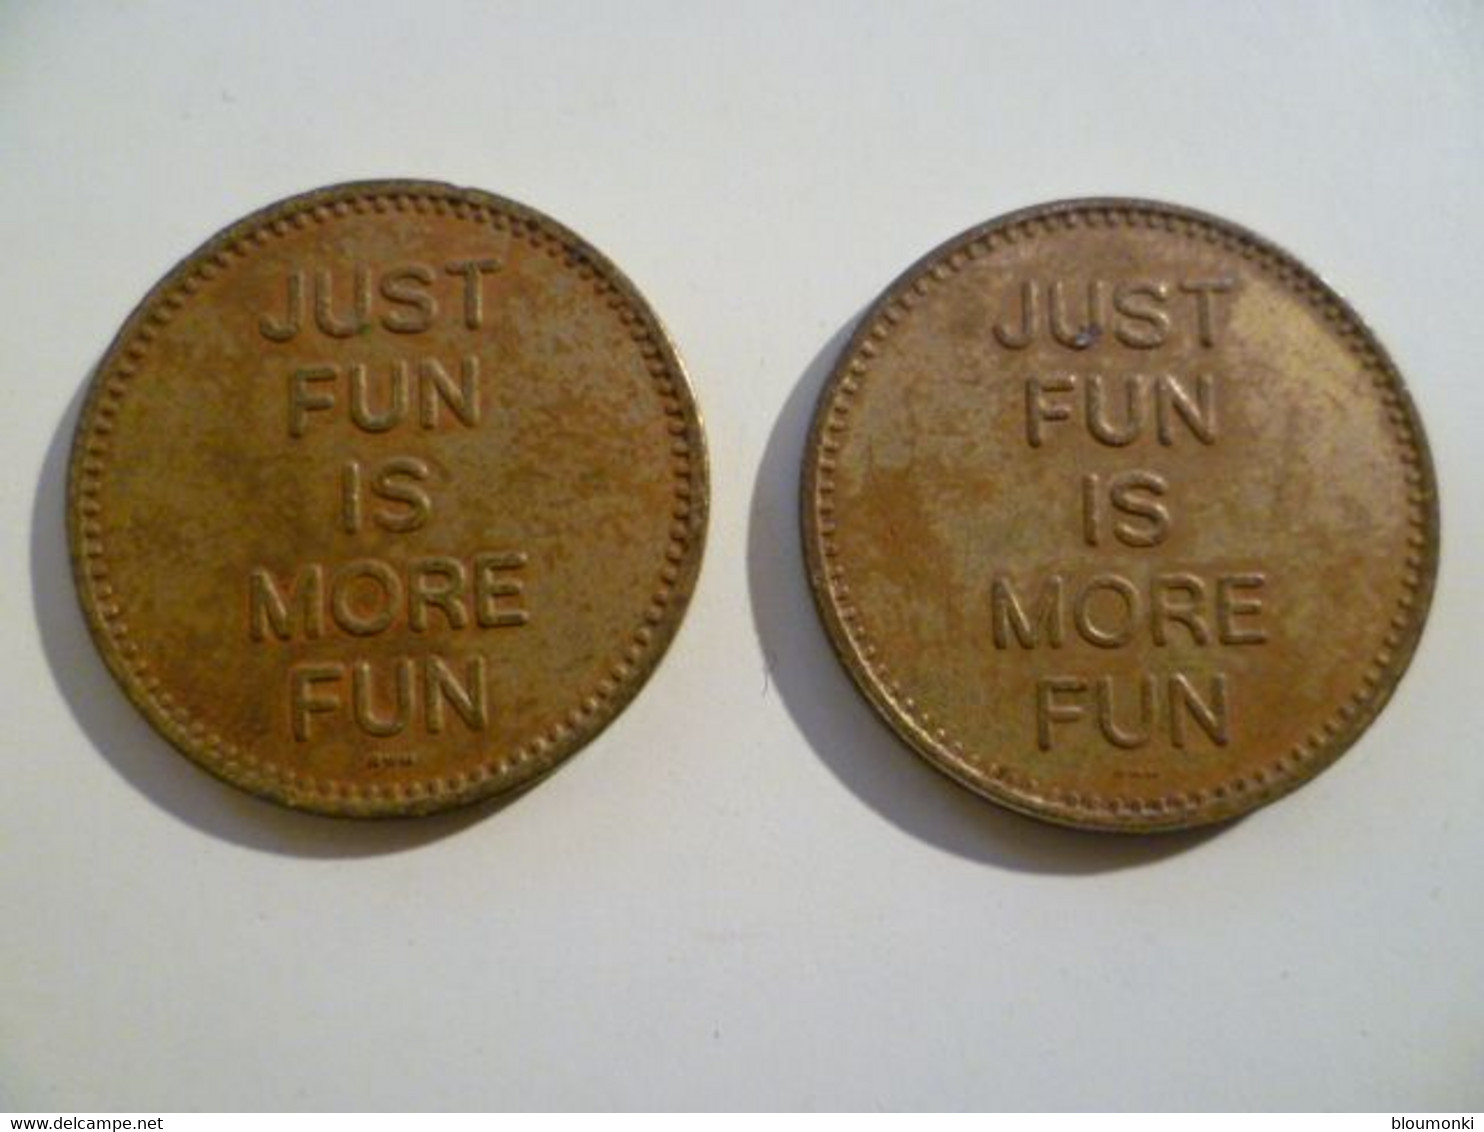 2 Jetons Etats Unis / USA Coins / ACRA No Cash Value Just Fun Is More Fun - Firma's